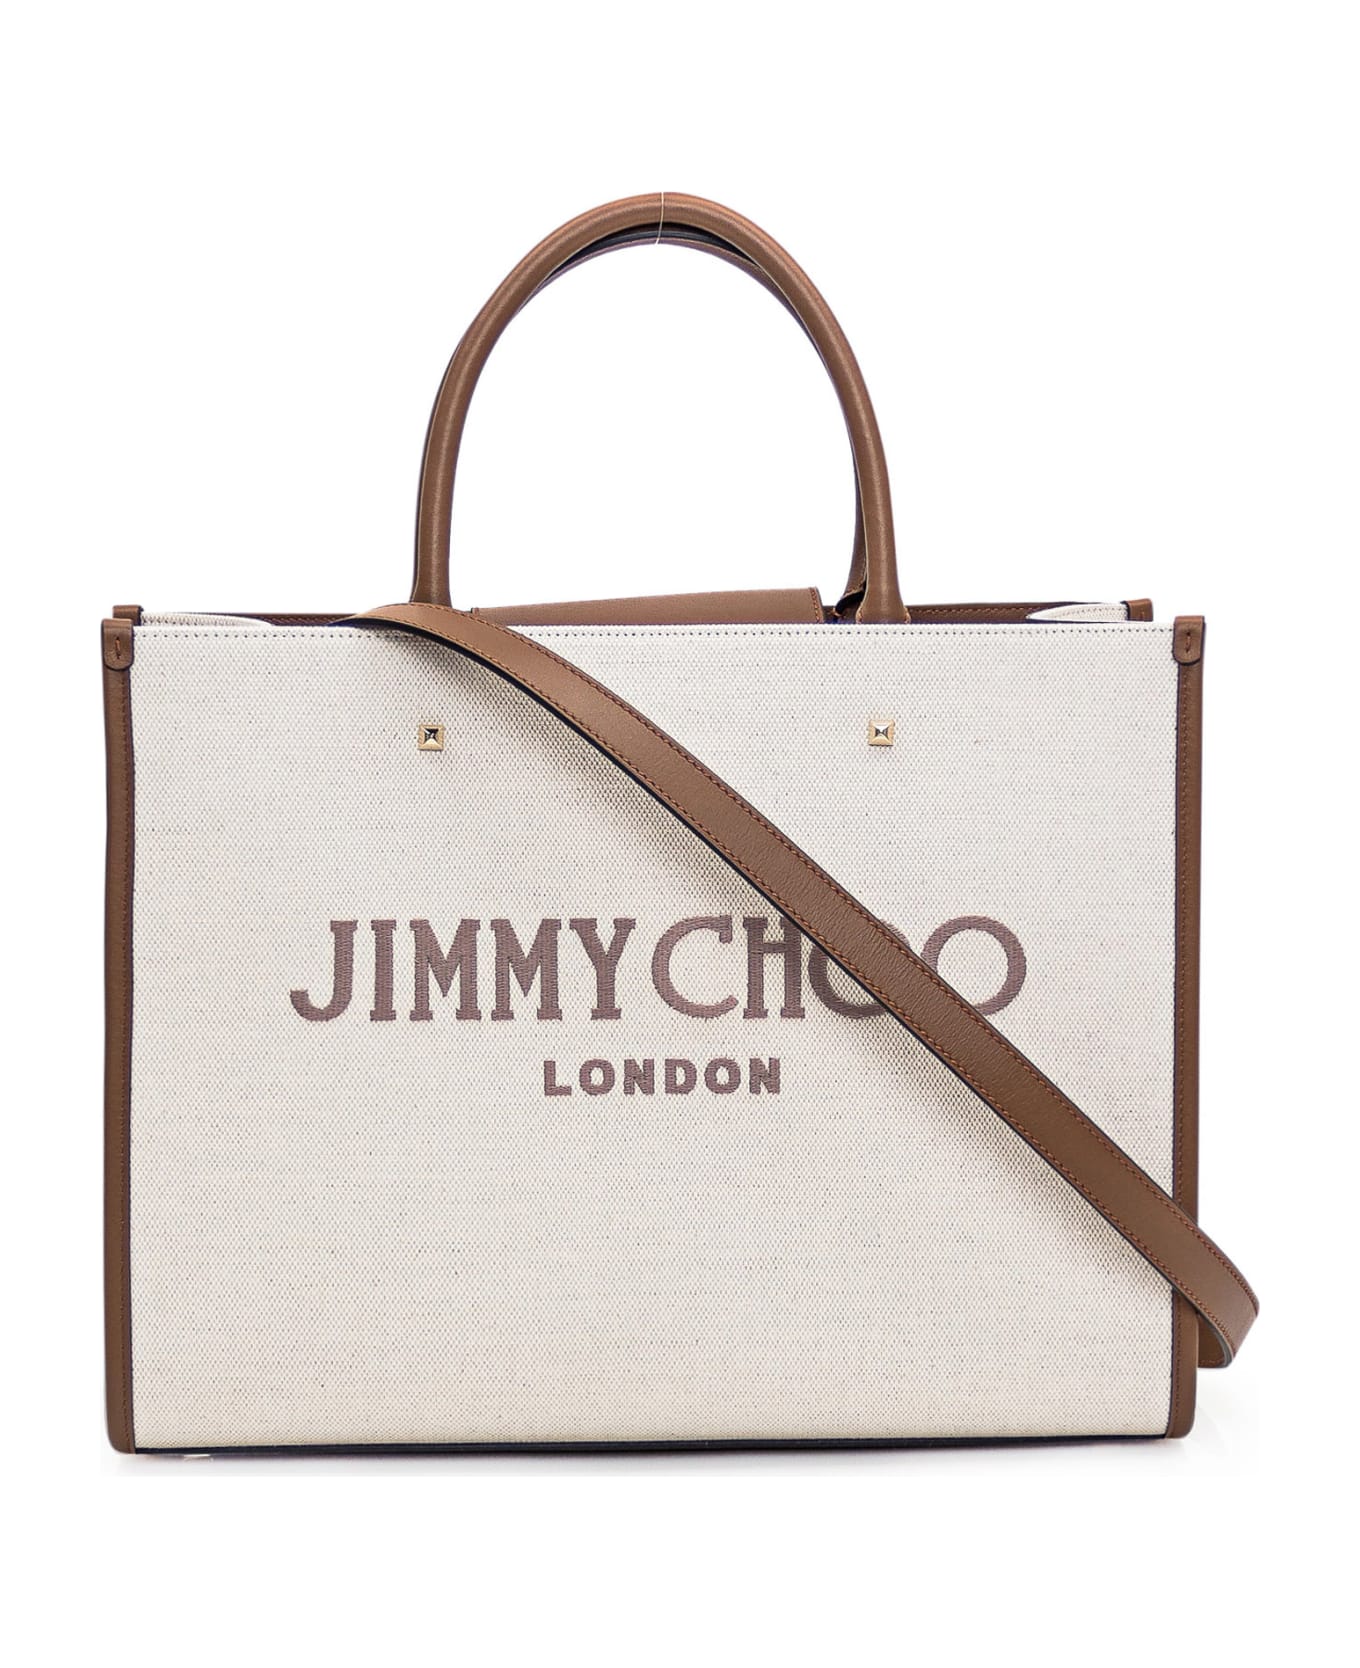 Jimmy Choo Tote Avenue M Bag - NATURAL/TAUPE/DARK TAN/LIGHT G